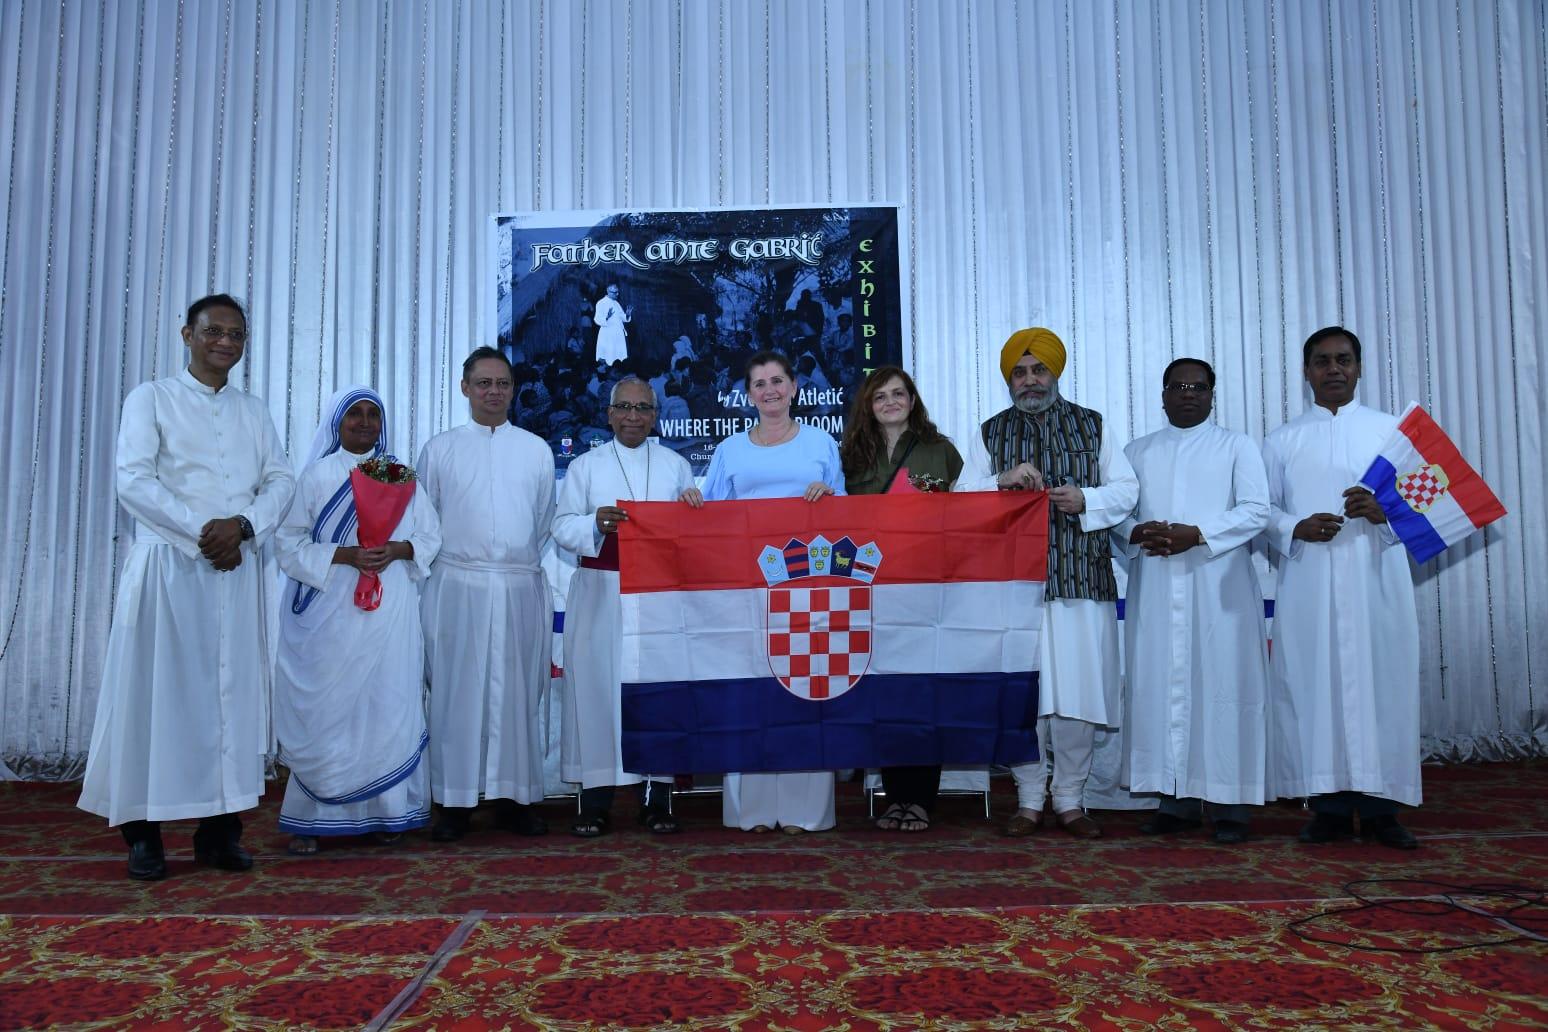 Kolkata exhibit celebrates Croatian missionary, friend of Mother Teresa